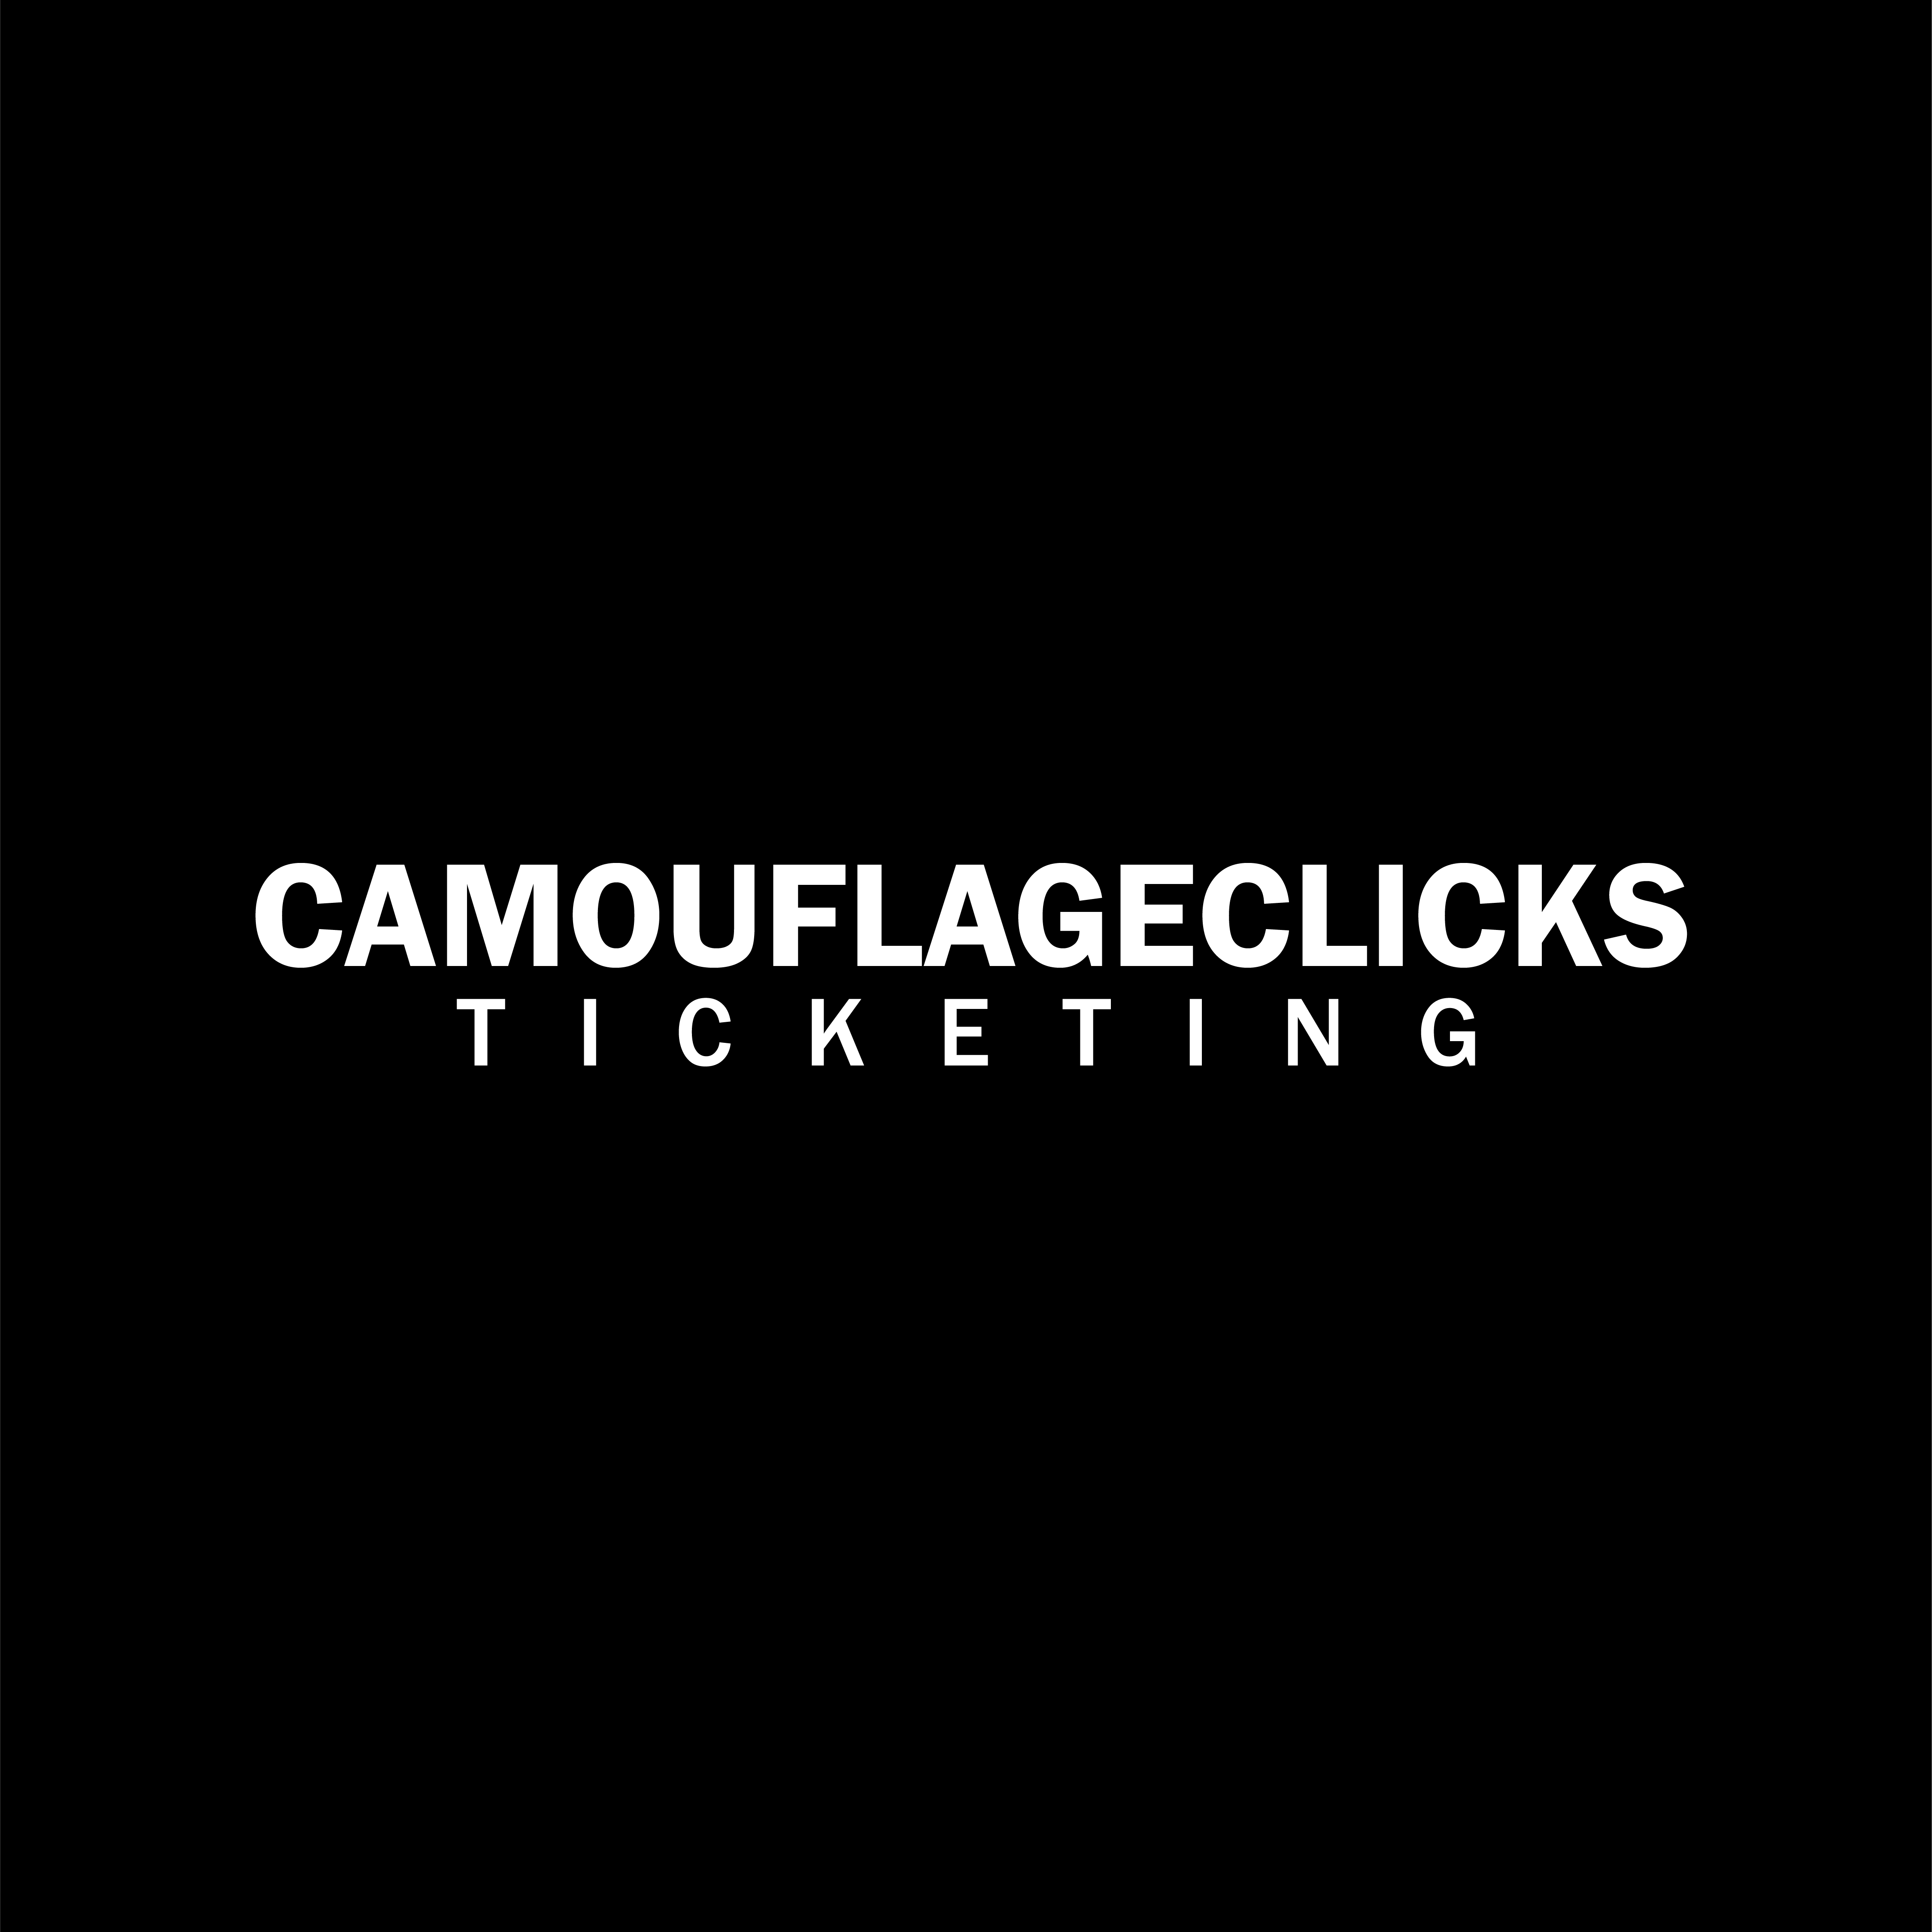 Camouflageclicks Ticketing|Photographer|Event Services